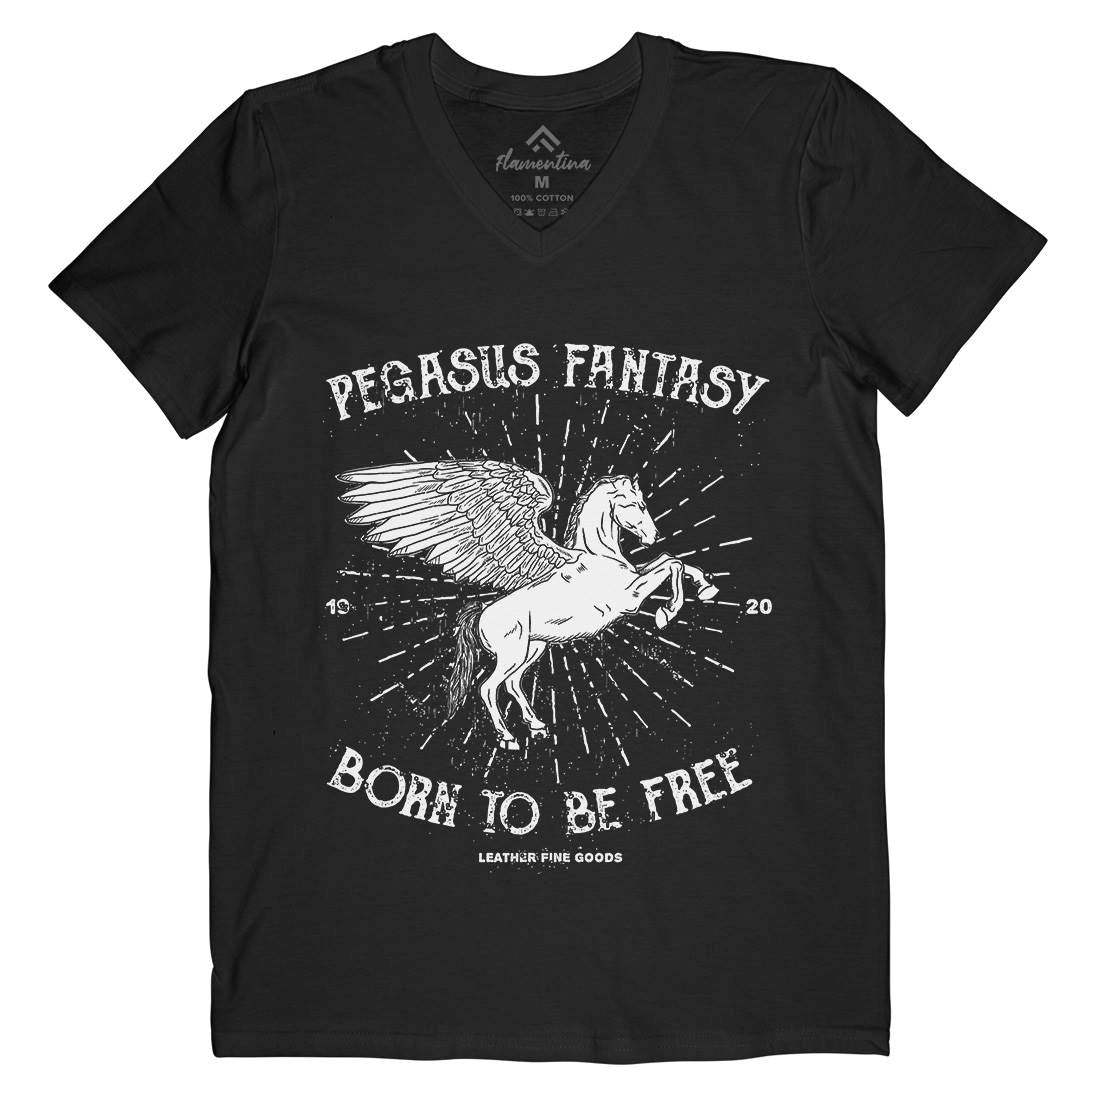 Pegasus Fantasy Mens Organic V-Neck T-Shirt Animals B749